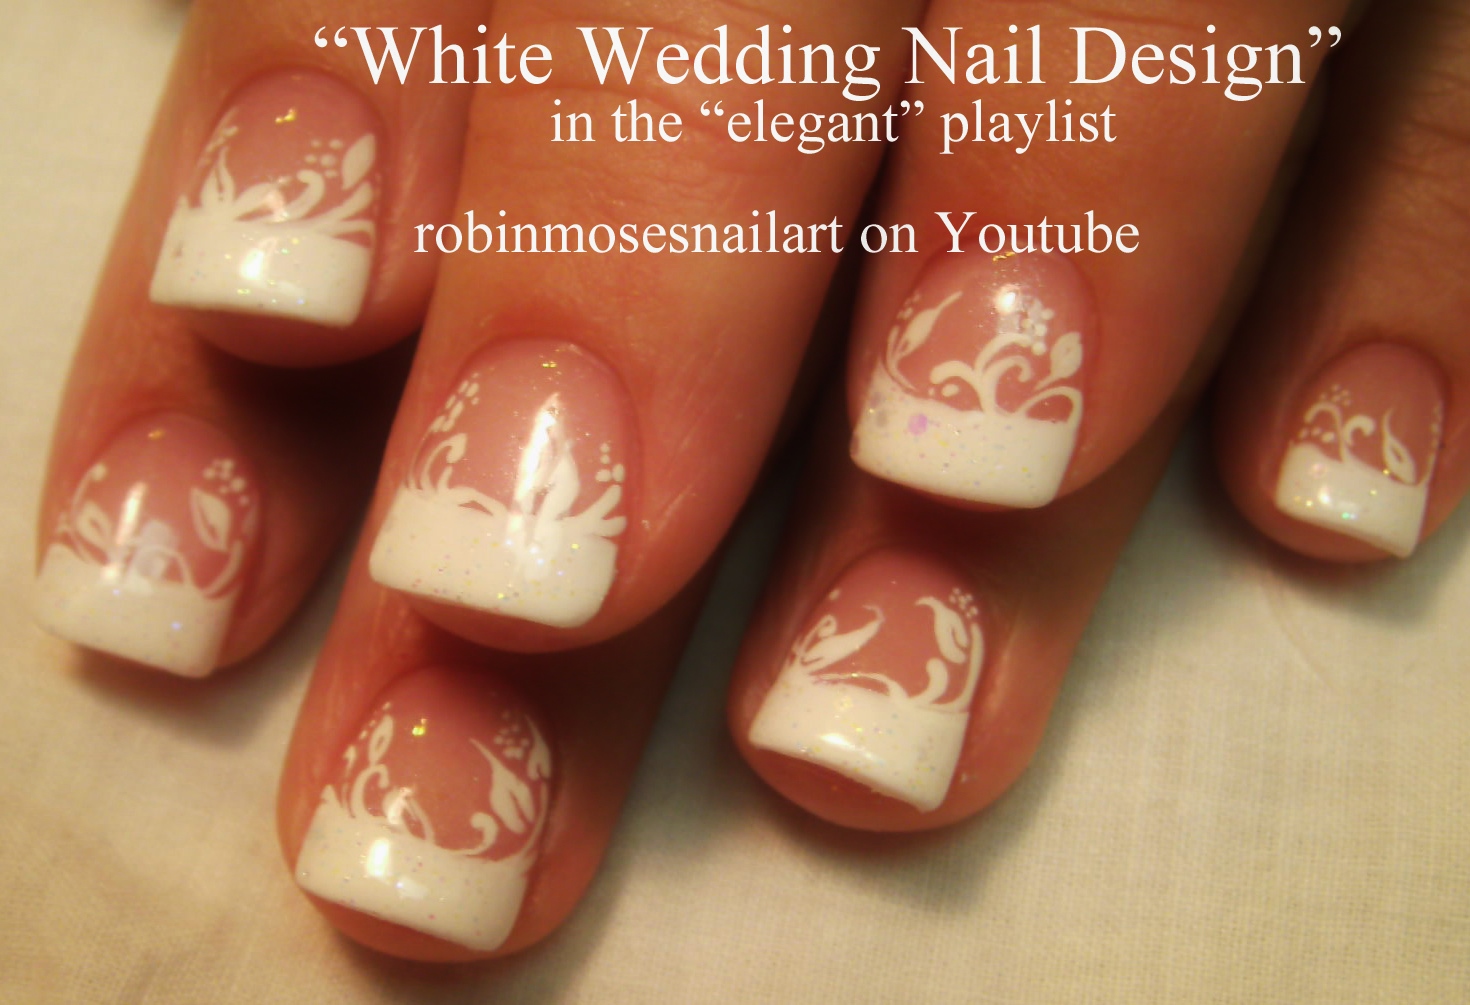 White Flower Nail Art with Rhinestones - wide 7